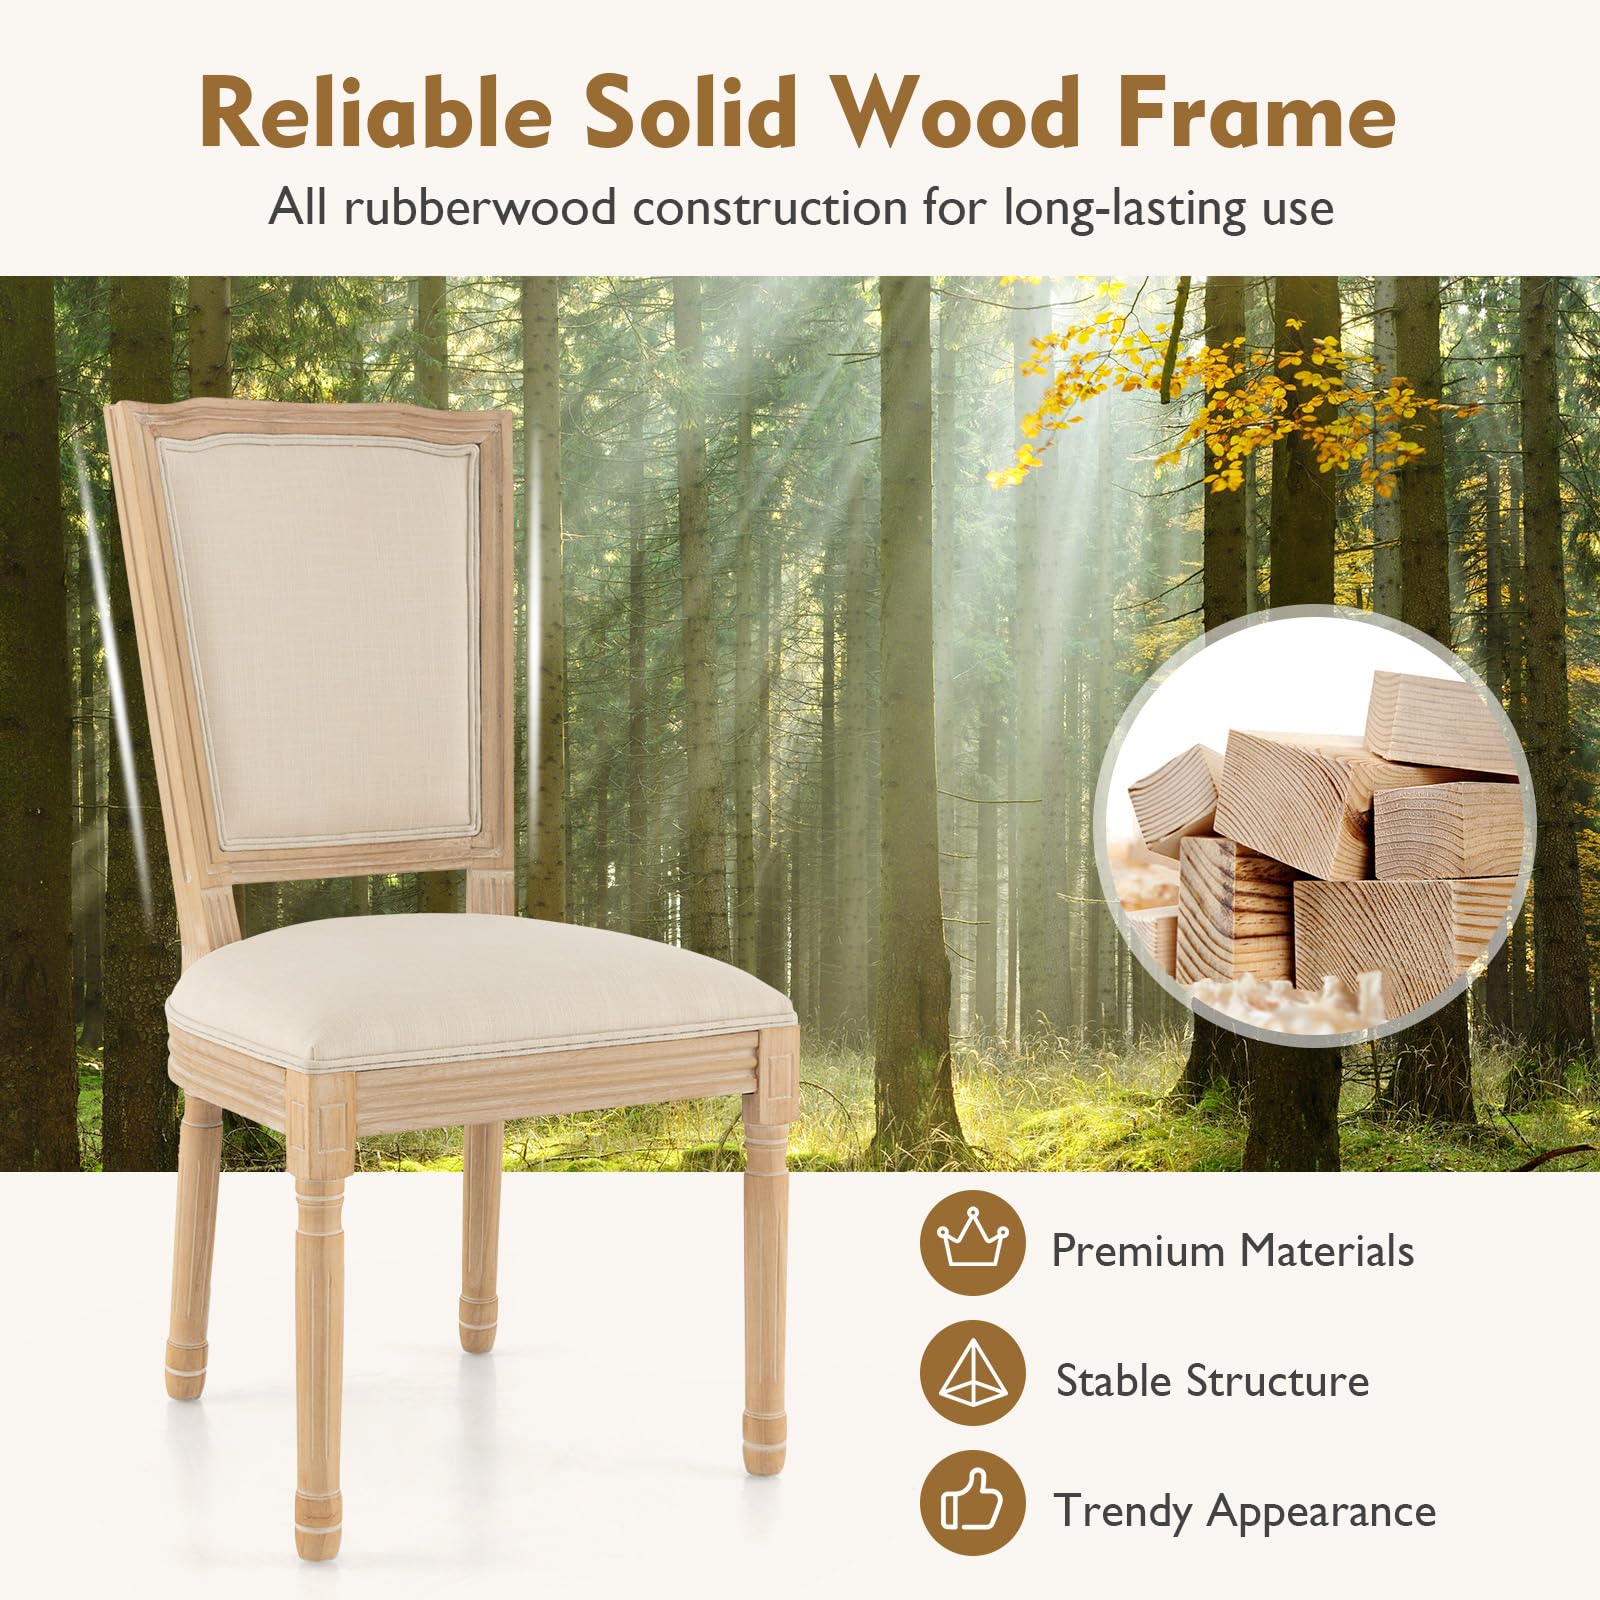 Giantex Wood Dining Chairs Set